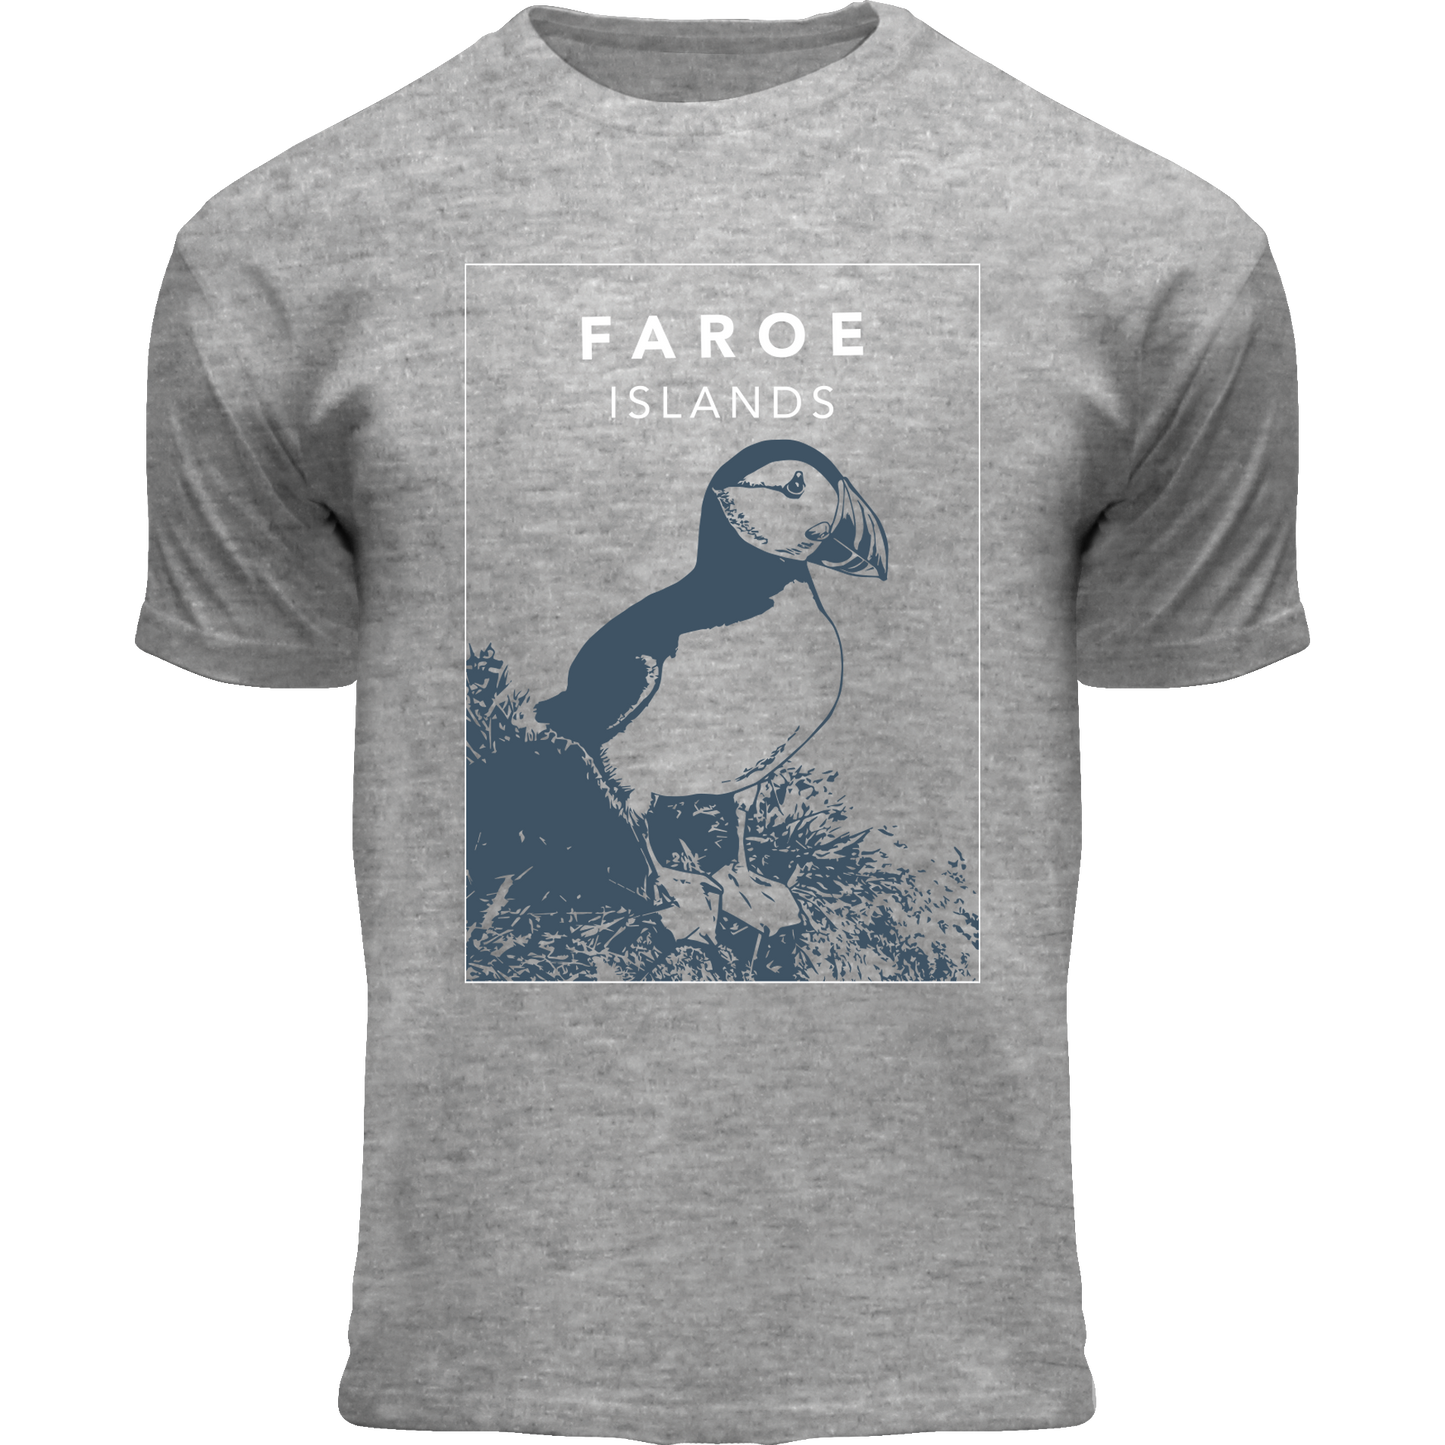 FOX T-shirt KIDS Square Puffin Heather Grey, "Faroe Islands"